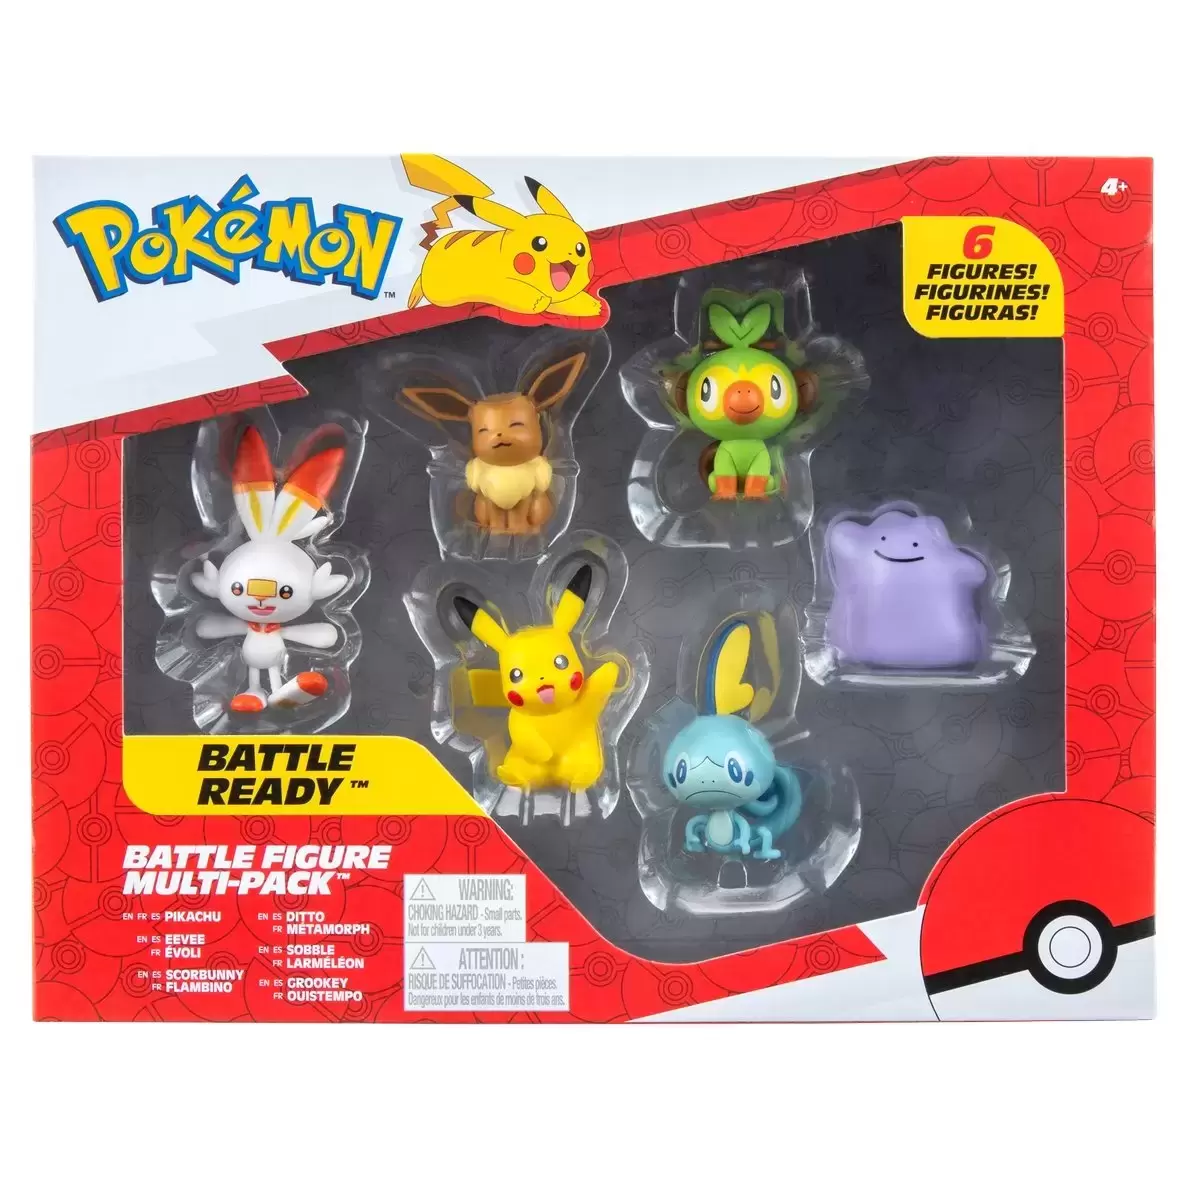 Set de figuras Pokémon Battle Ready